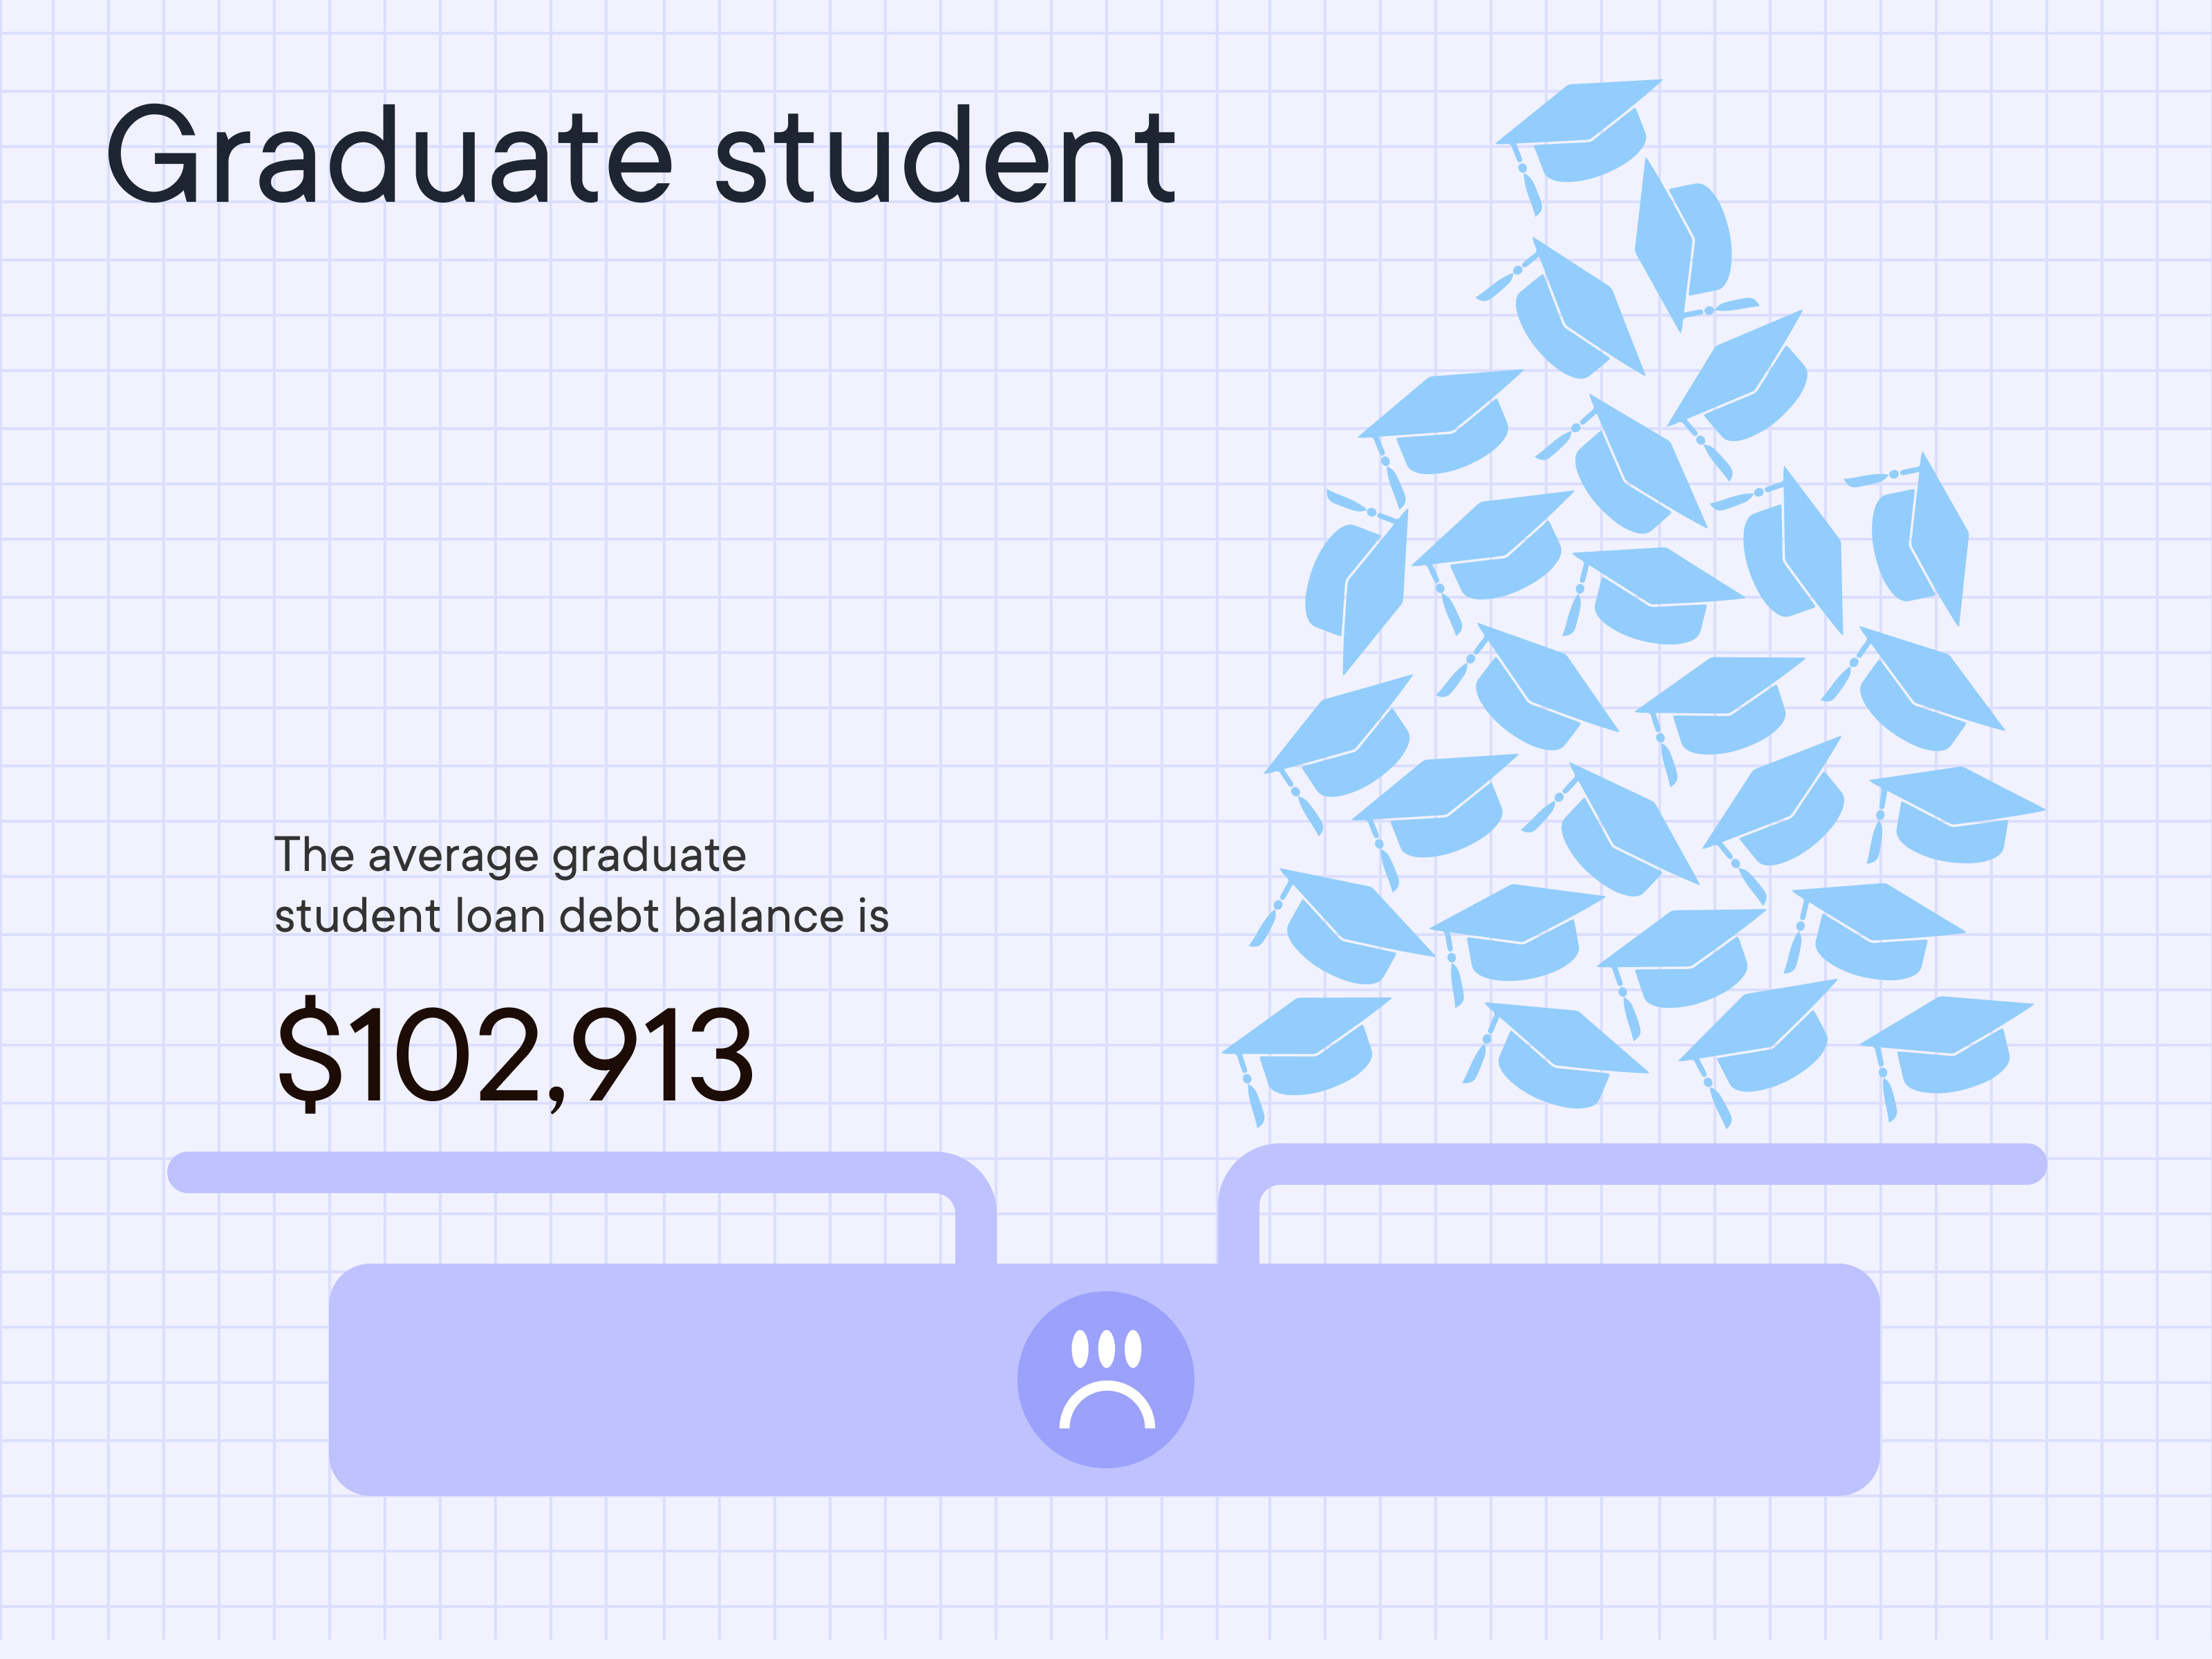 The average graduate student loan debt balance is $102,913